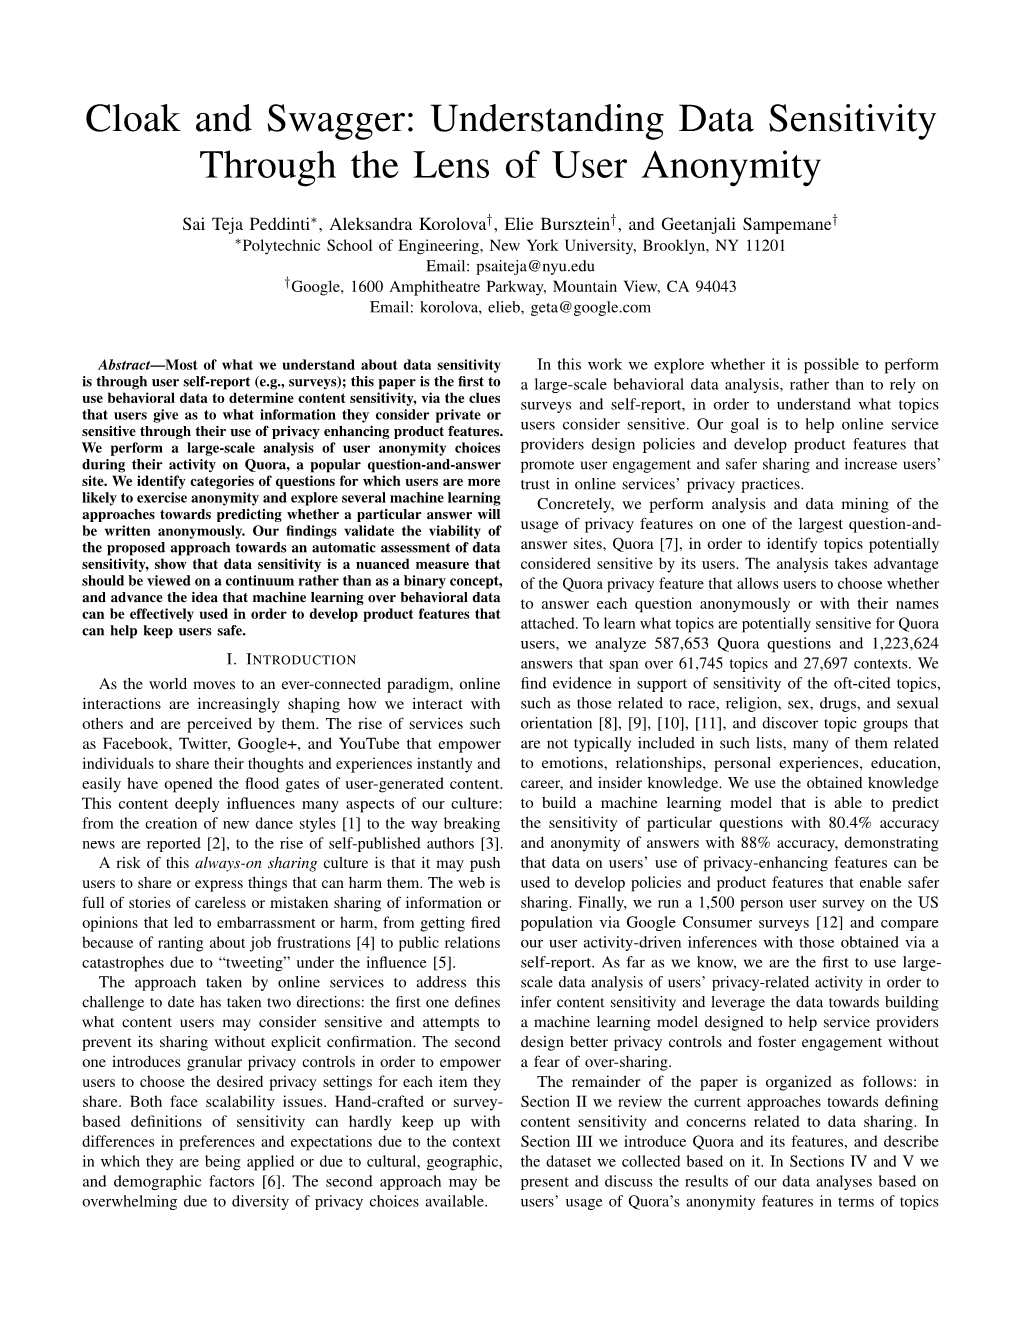 Understanding Data Sensitivity Through the Lens of User Anonymity